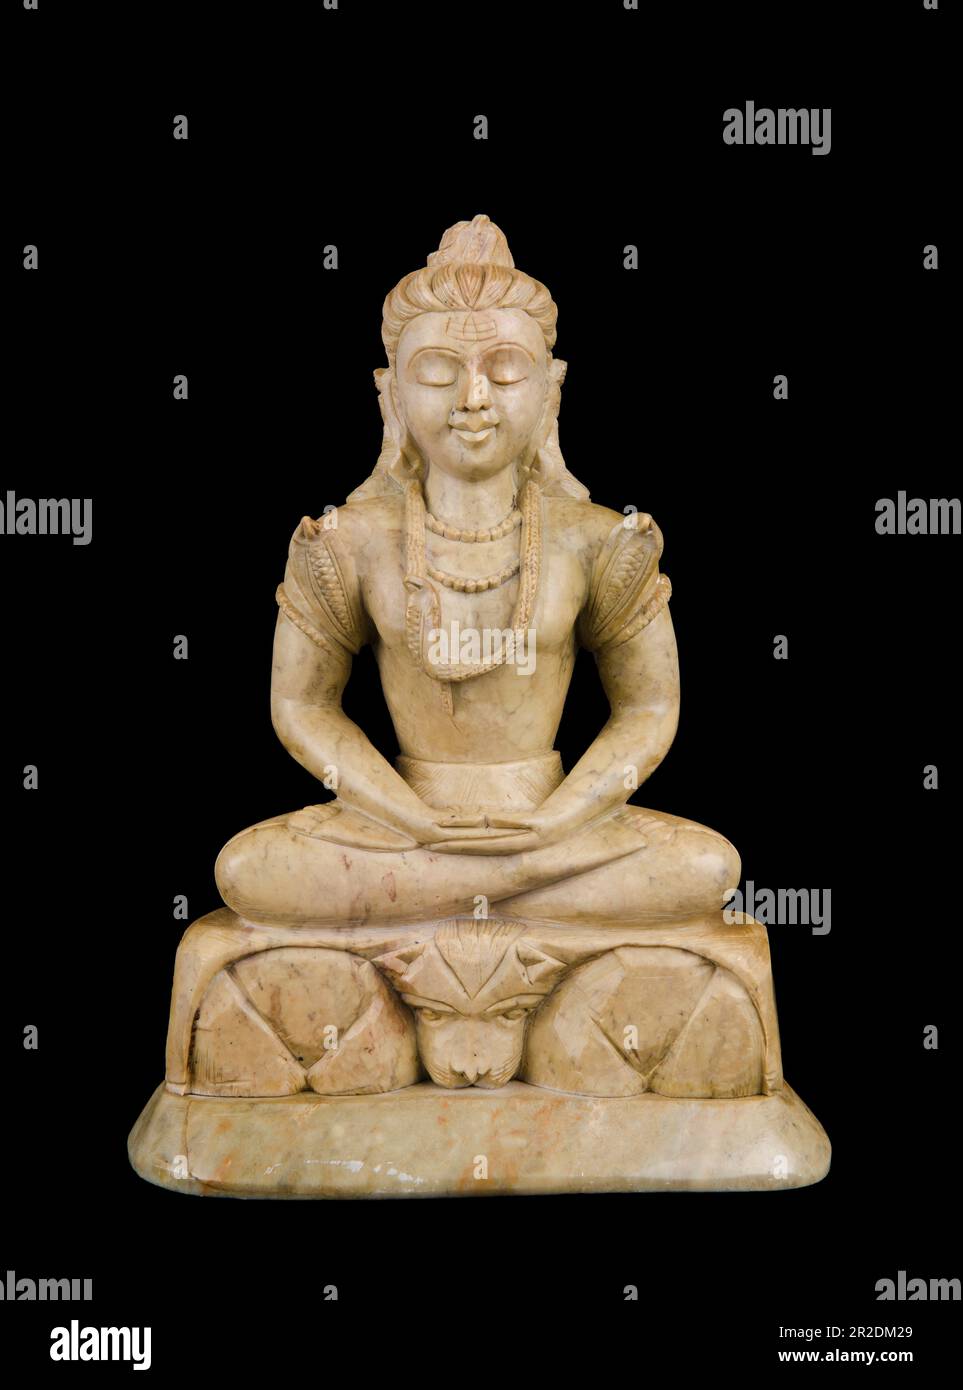 Lord Shiva statue, carved hardstone contemplative, Hindu god Stock Photo